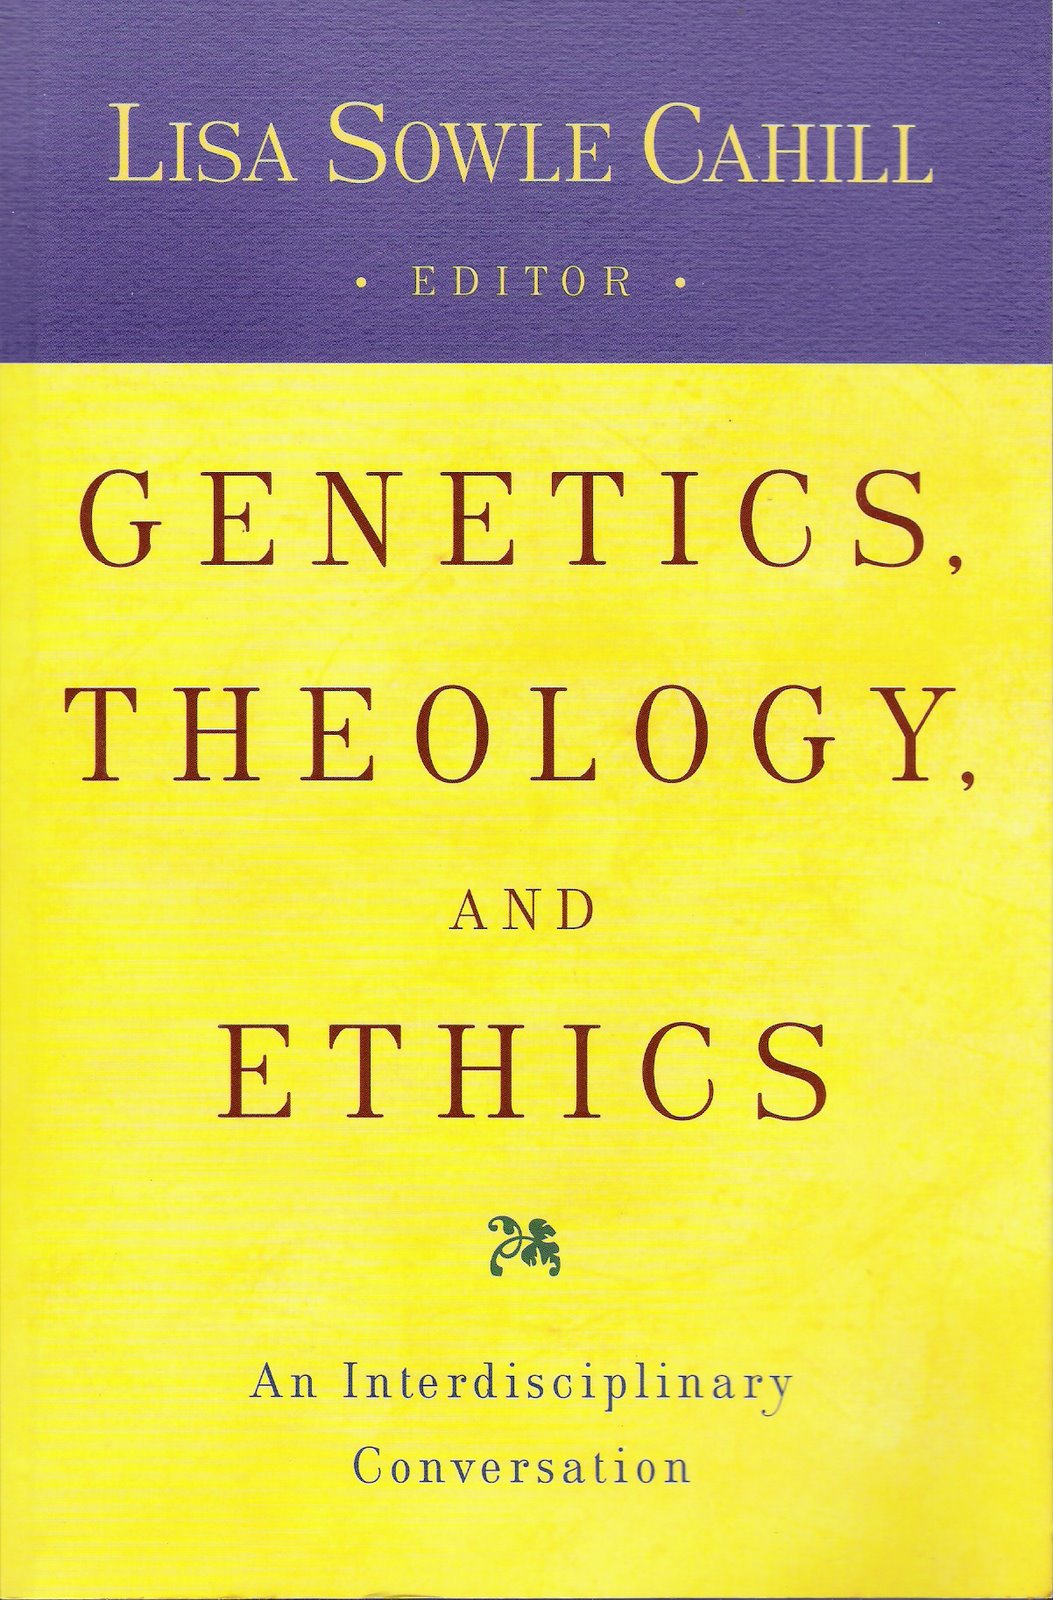 [Cahill_Genteics-theology-ethics.jpg]